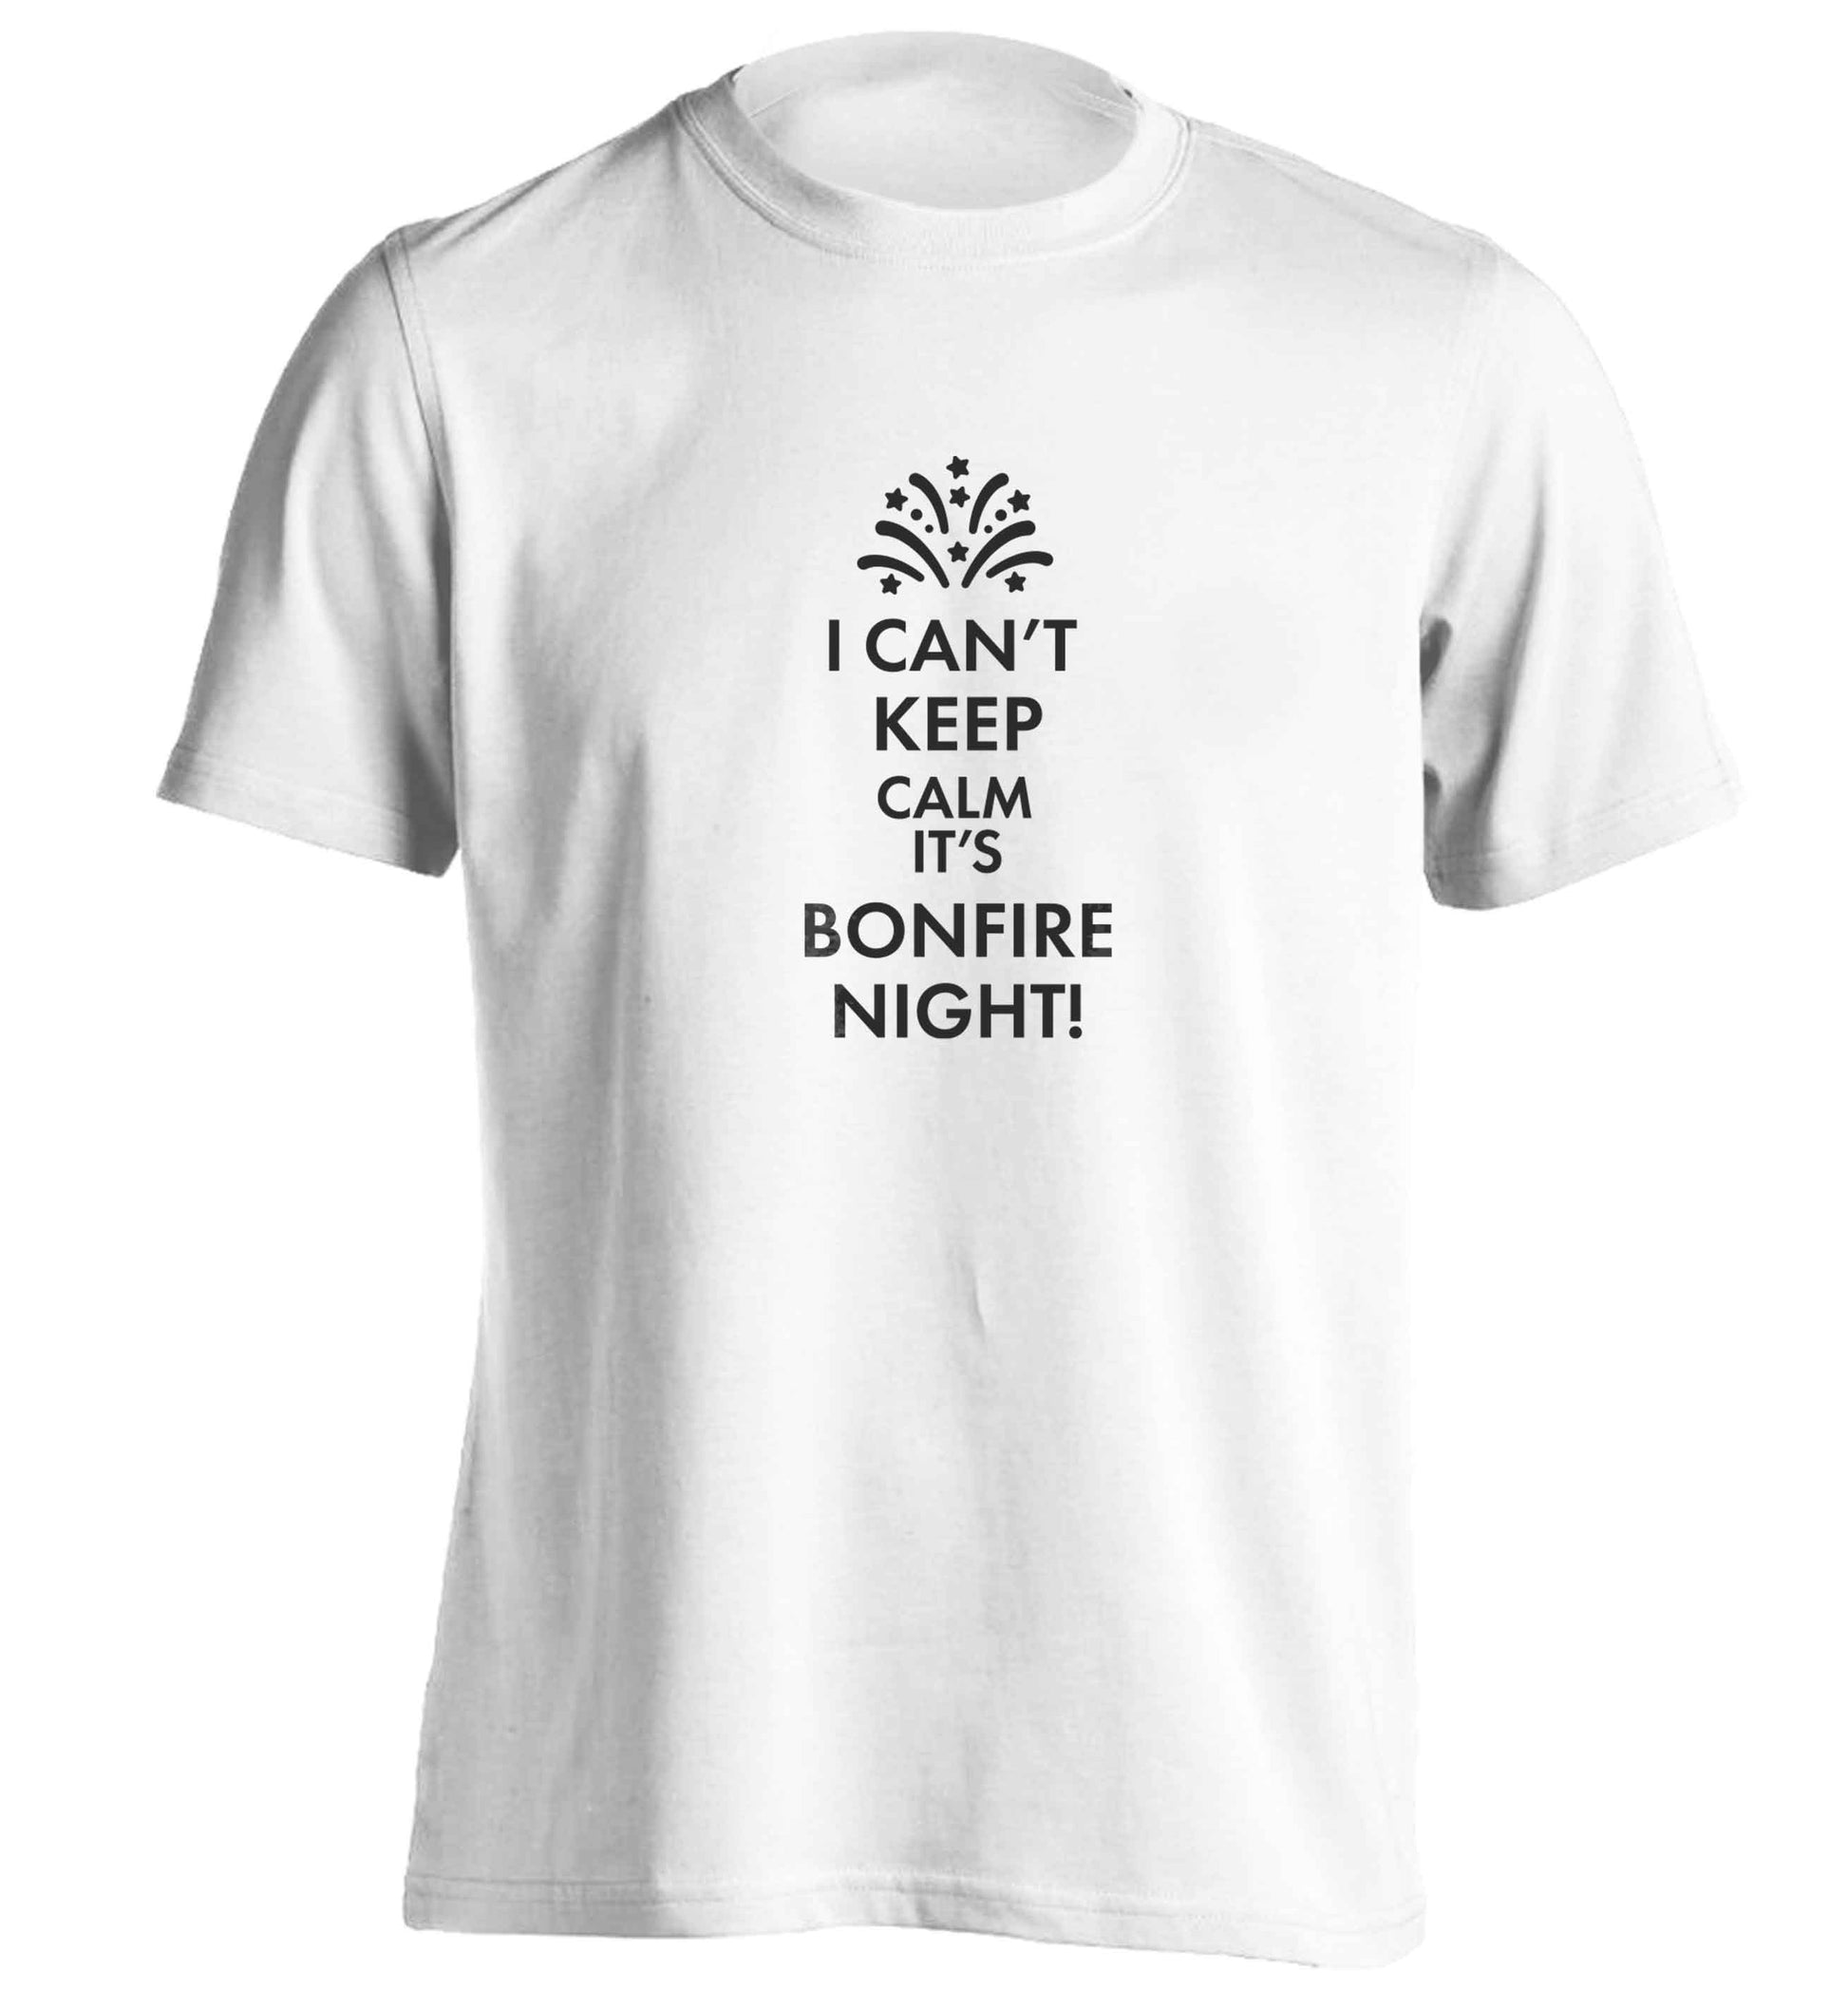 I can't keep calm its bonfire night adults unisex white Tshirt 2XL